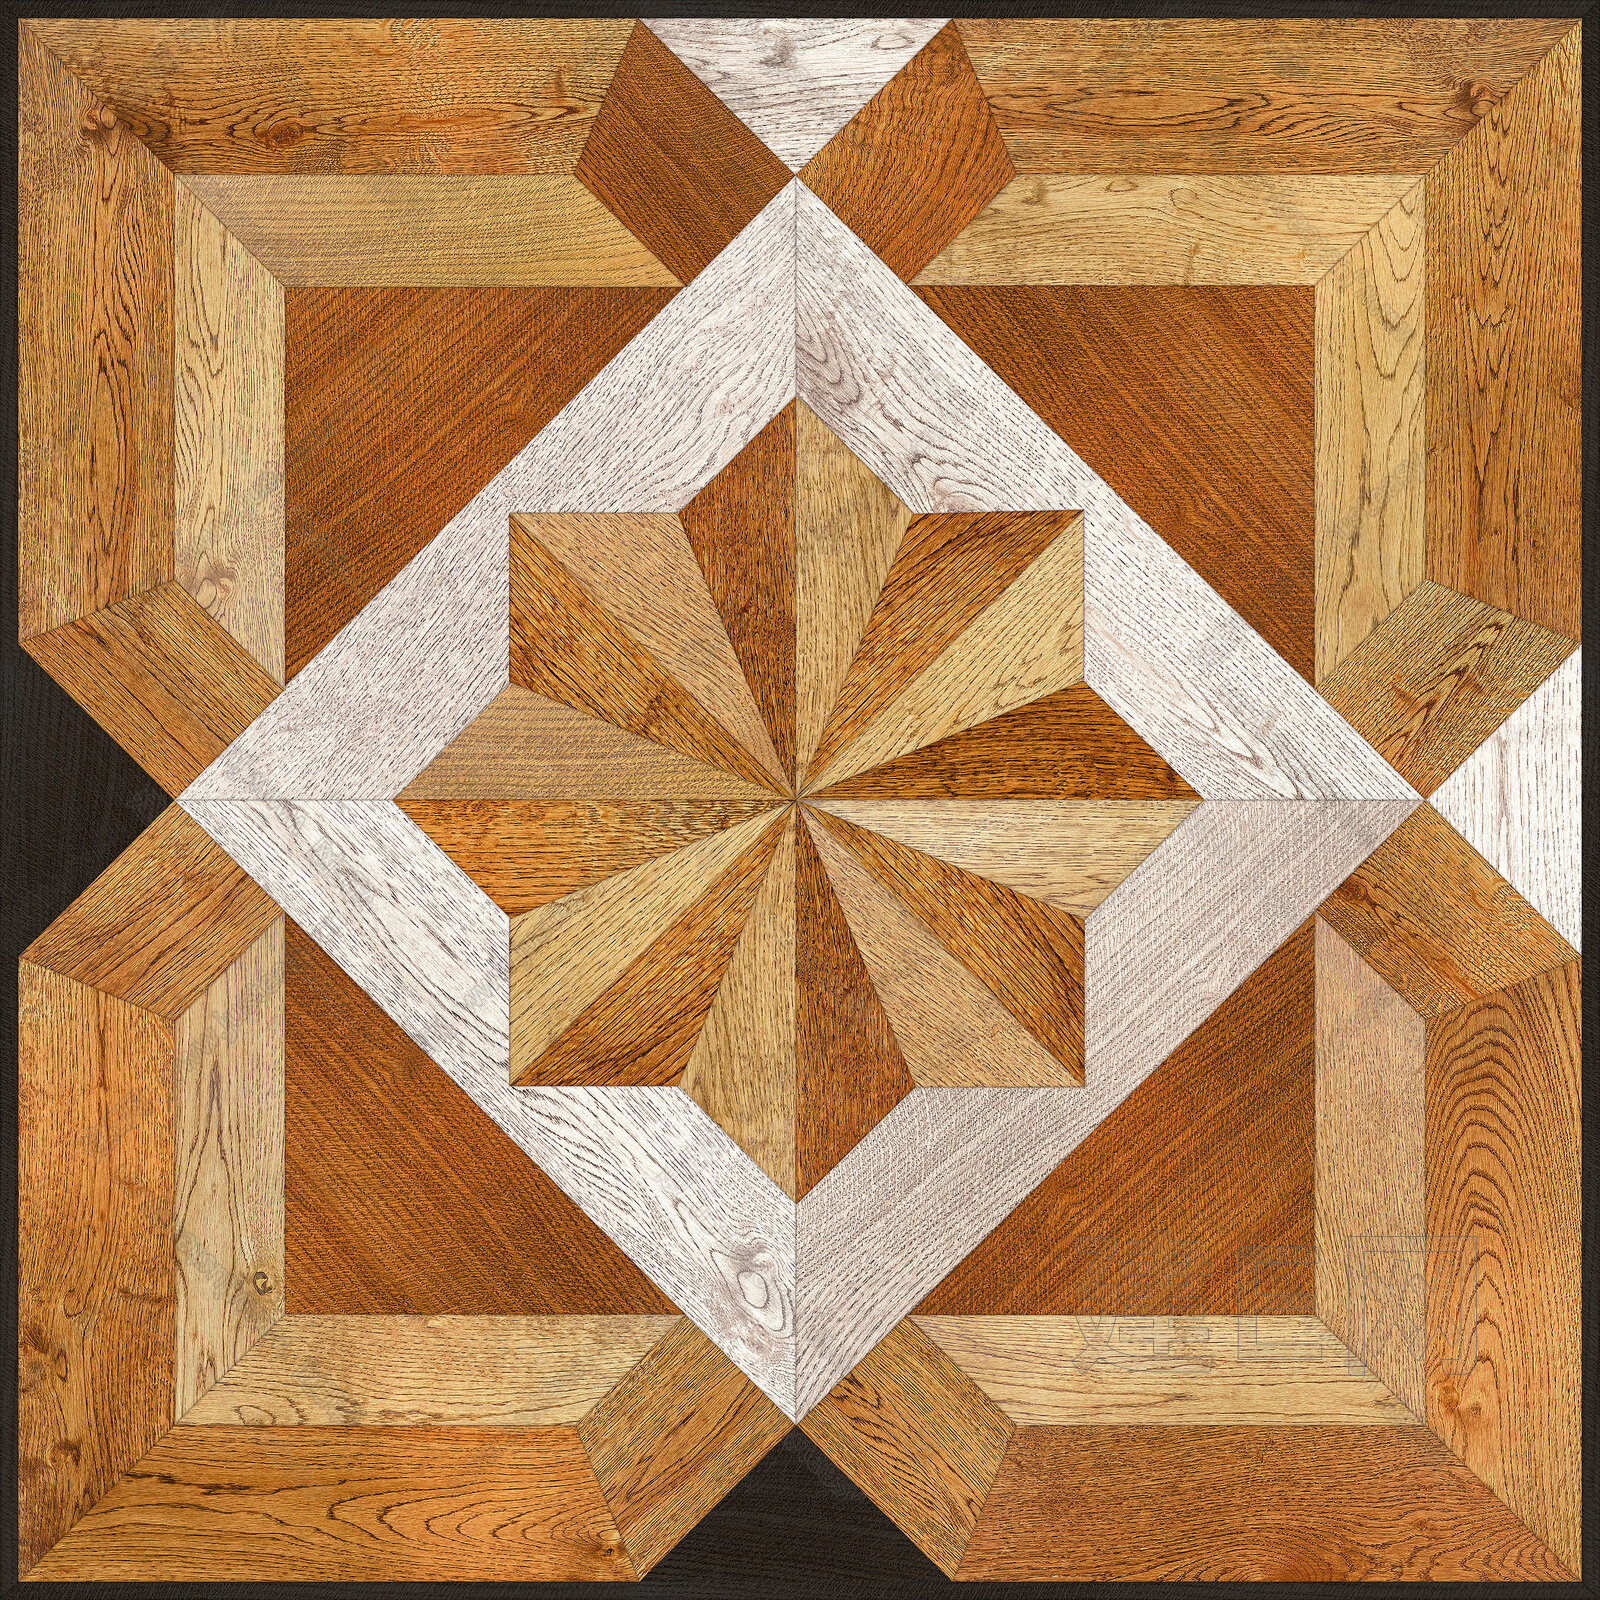 【3D贴图】拼花木地板-3d材质贴图下载_贴图素材_3d贴图网 - 建E网3dmax材质库